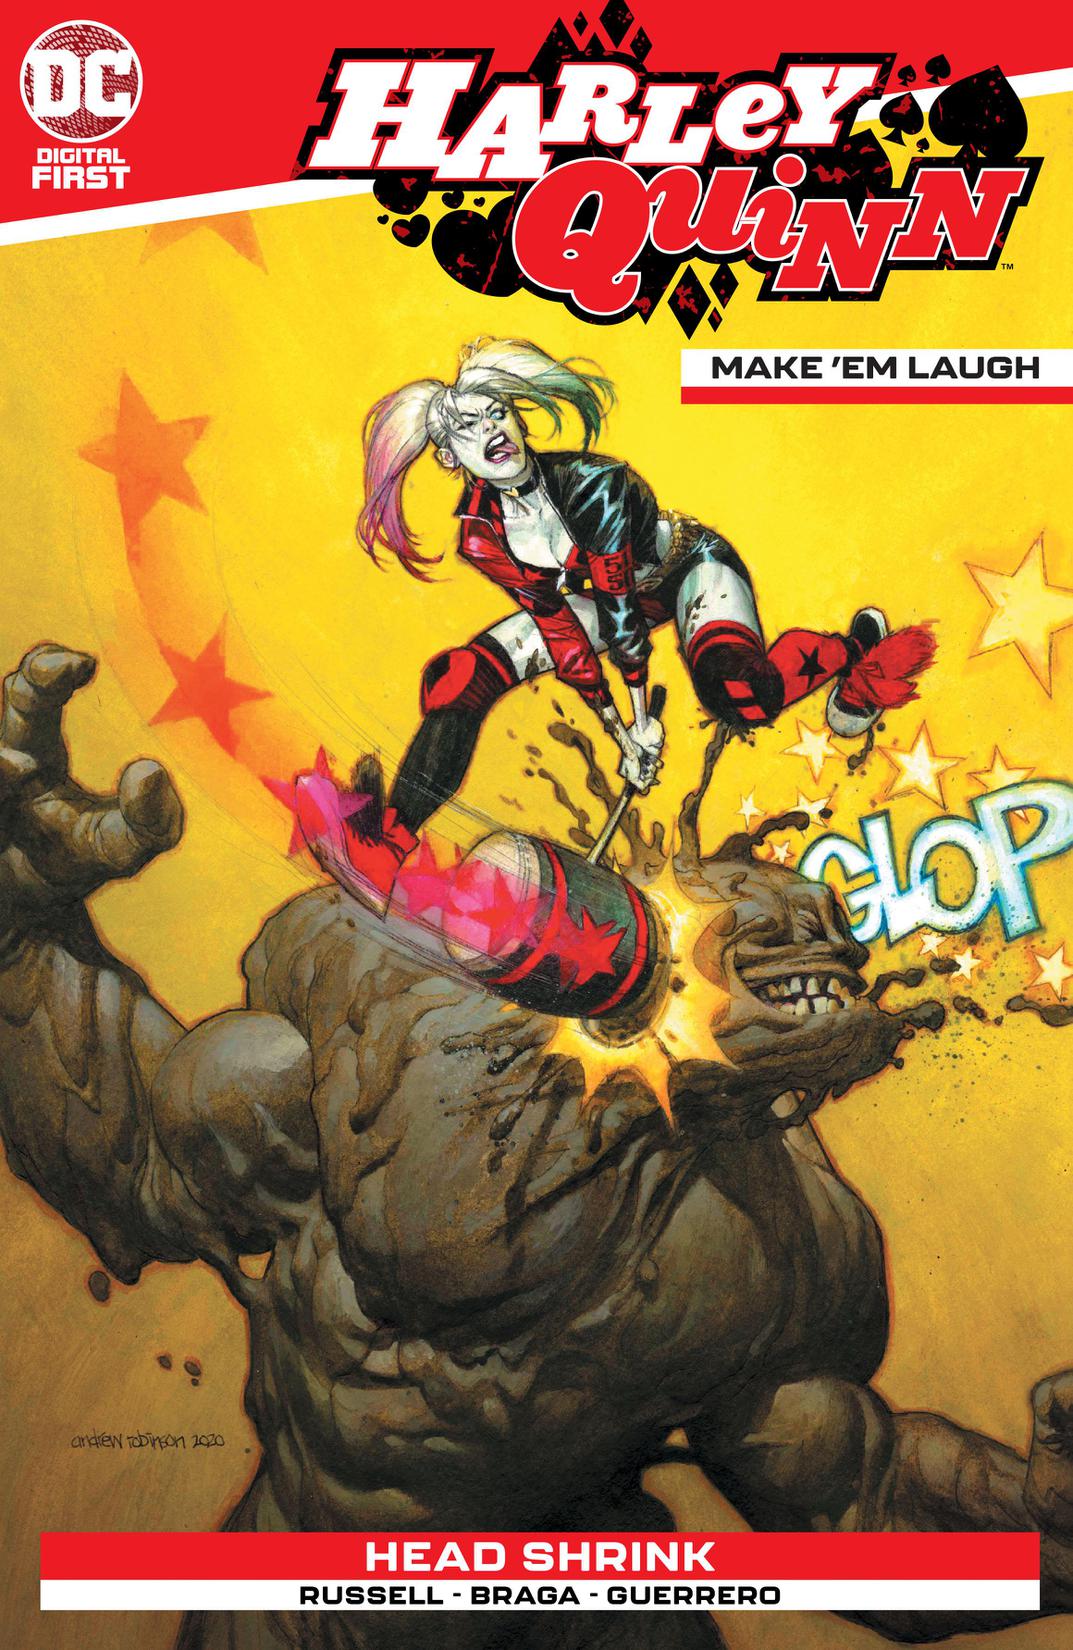 Harley Quinn: Make 'em Laugh #1 preview images